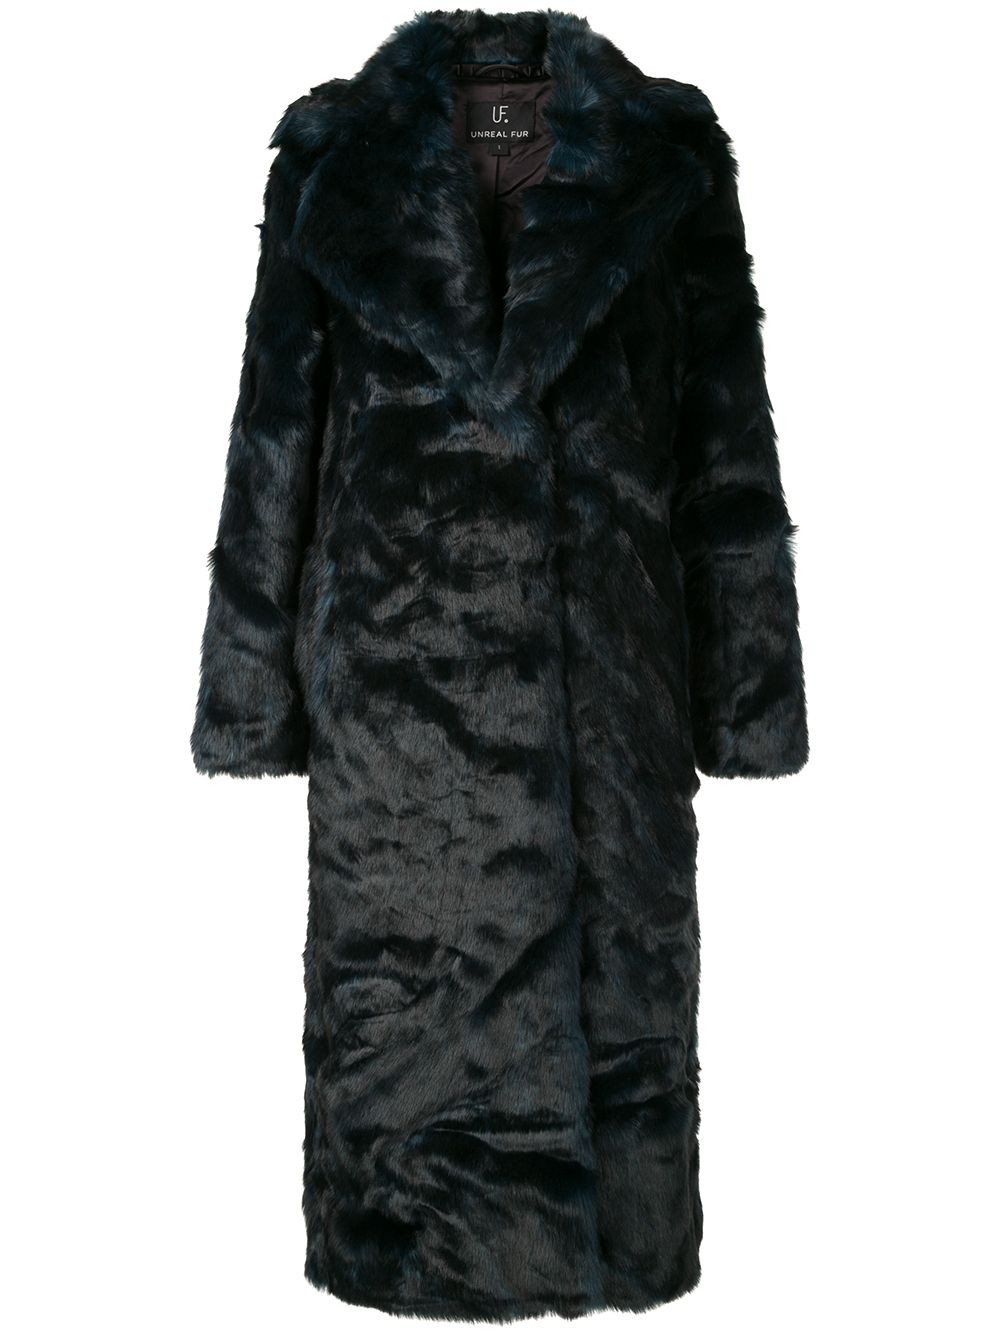 фото Unreal Fur фактурное пальто оверсайз